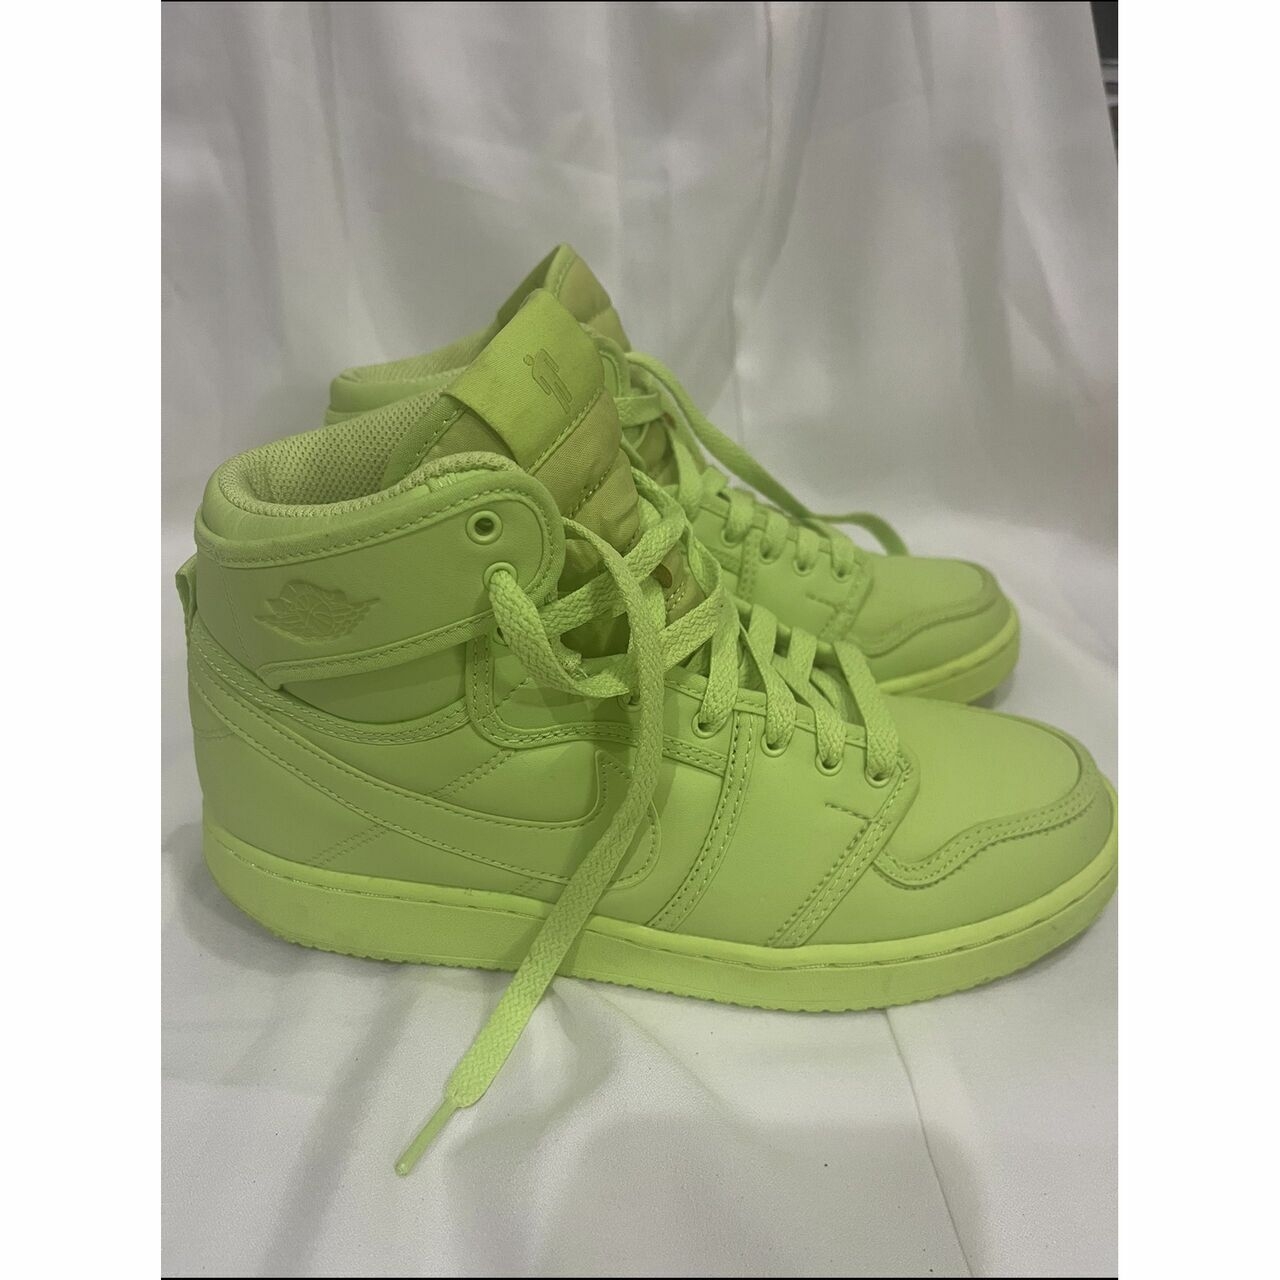 Air Jordan Light Green Sneakers